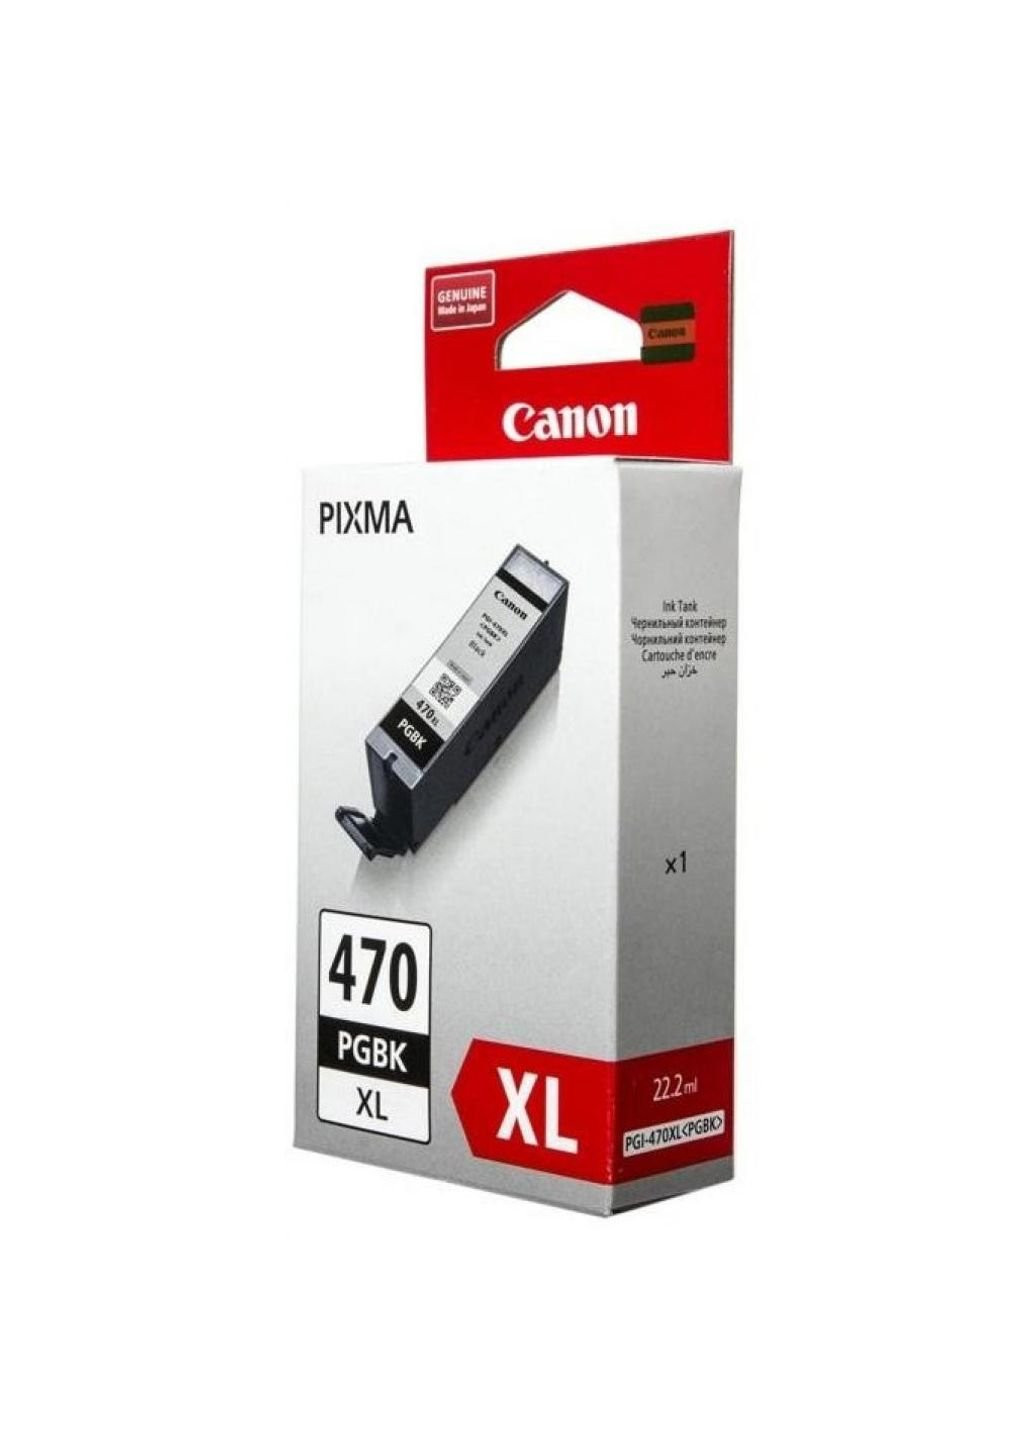 Картридж PGI-470Bk XL PIXMA MG5740 / MG6840 (0321C001) Canon pgi-470bk xl pixma mg5740/mg6840 (247617968)